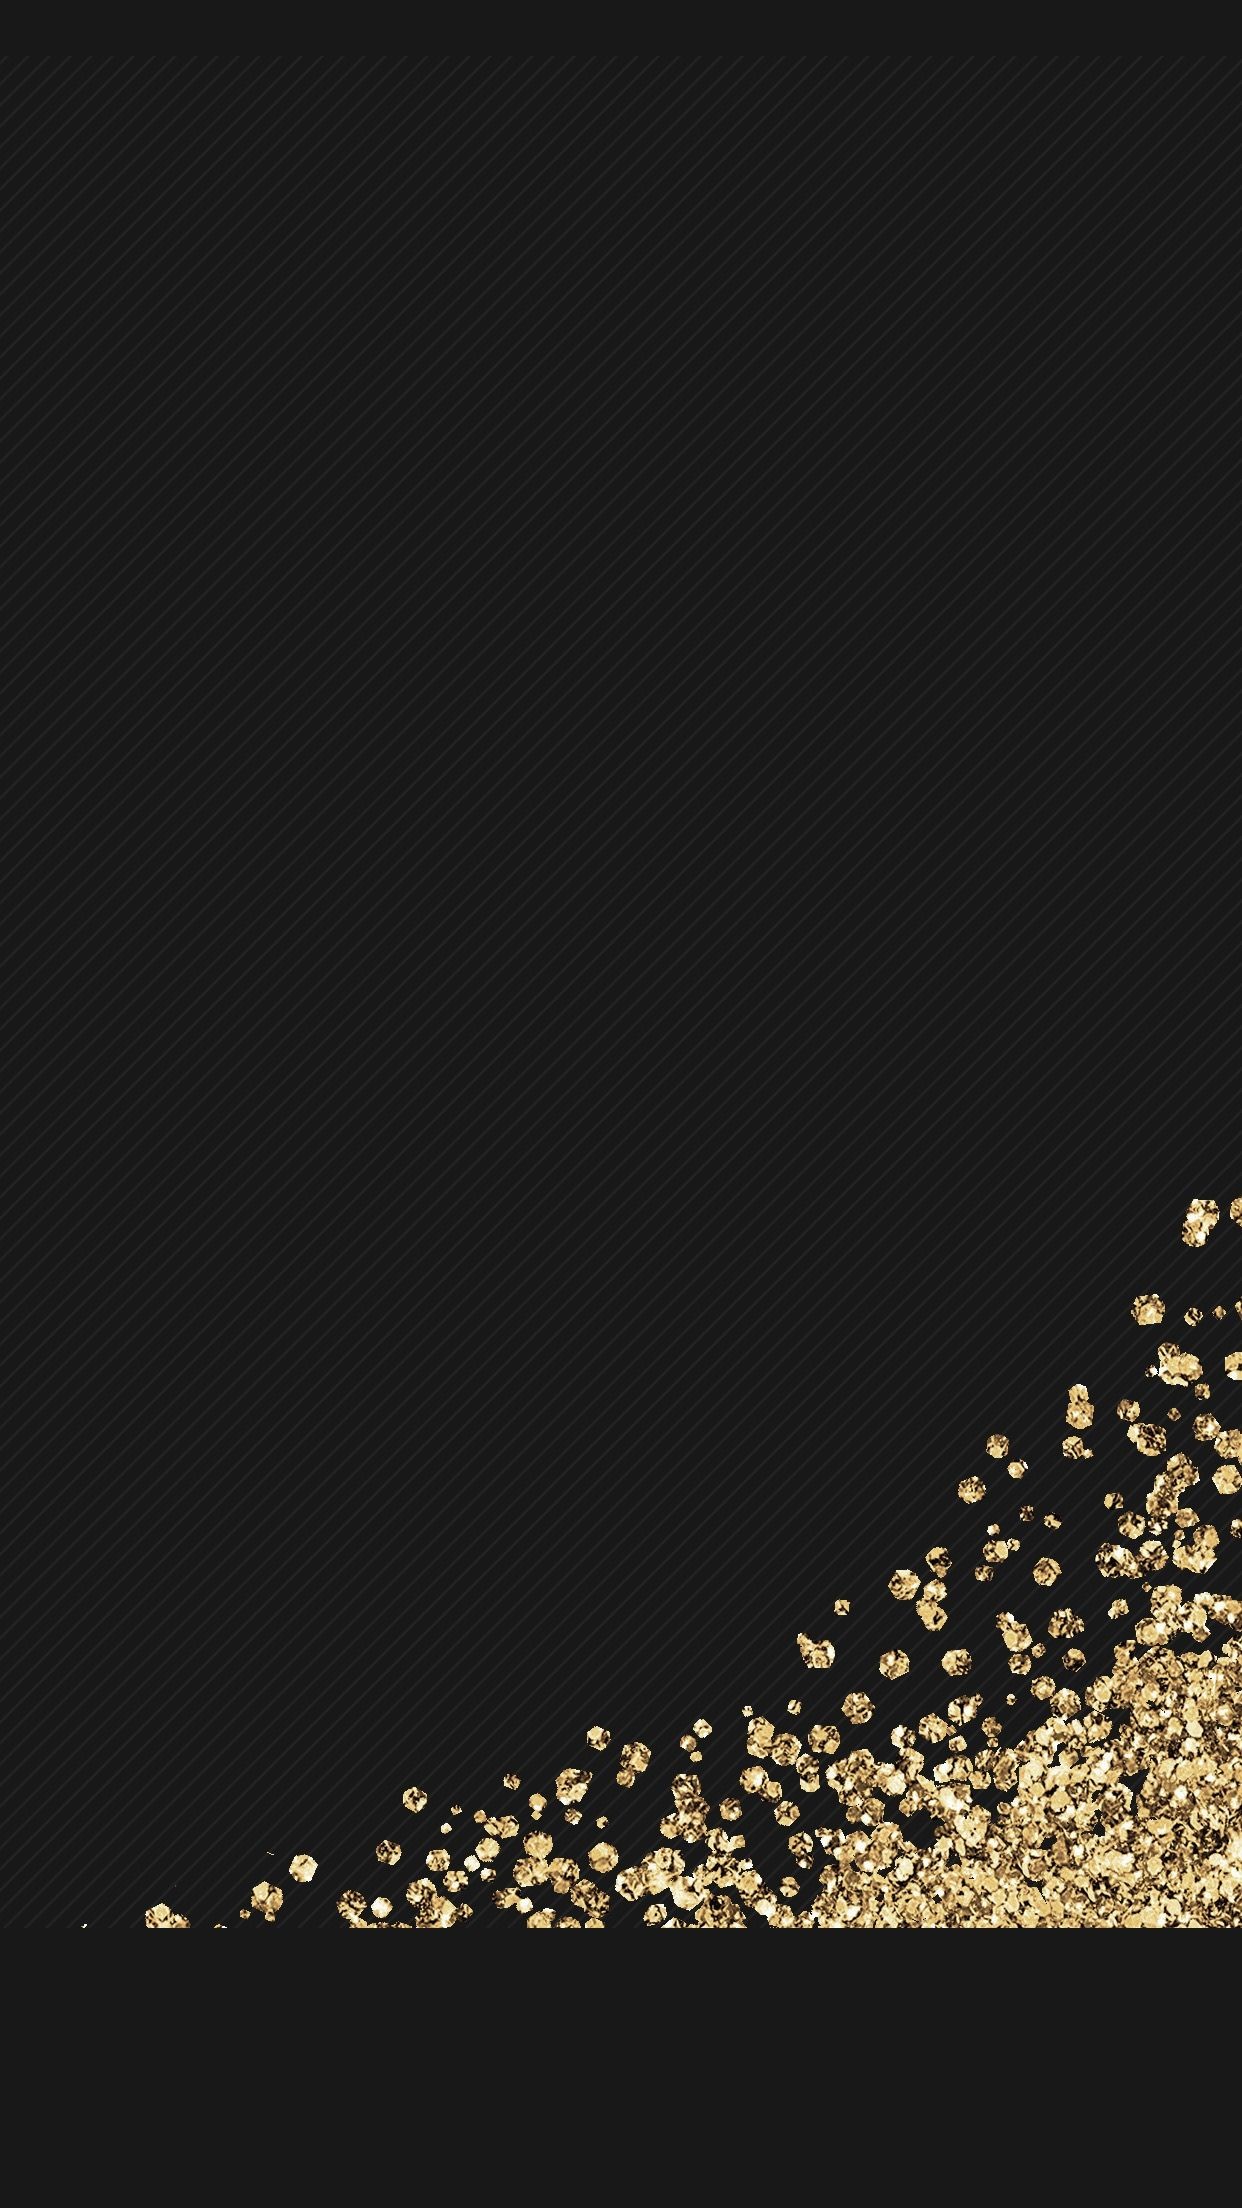 Gold Glitter Wallpapers Free Download - Cute Dark Wallpaper Hd , HD Wallpaper & Backgrounds